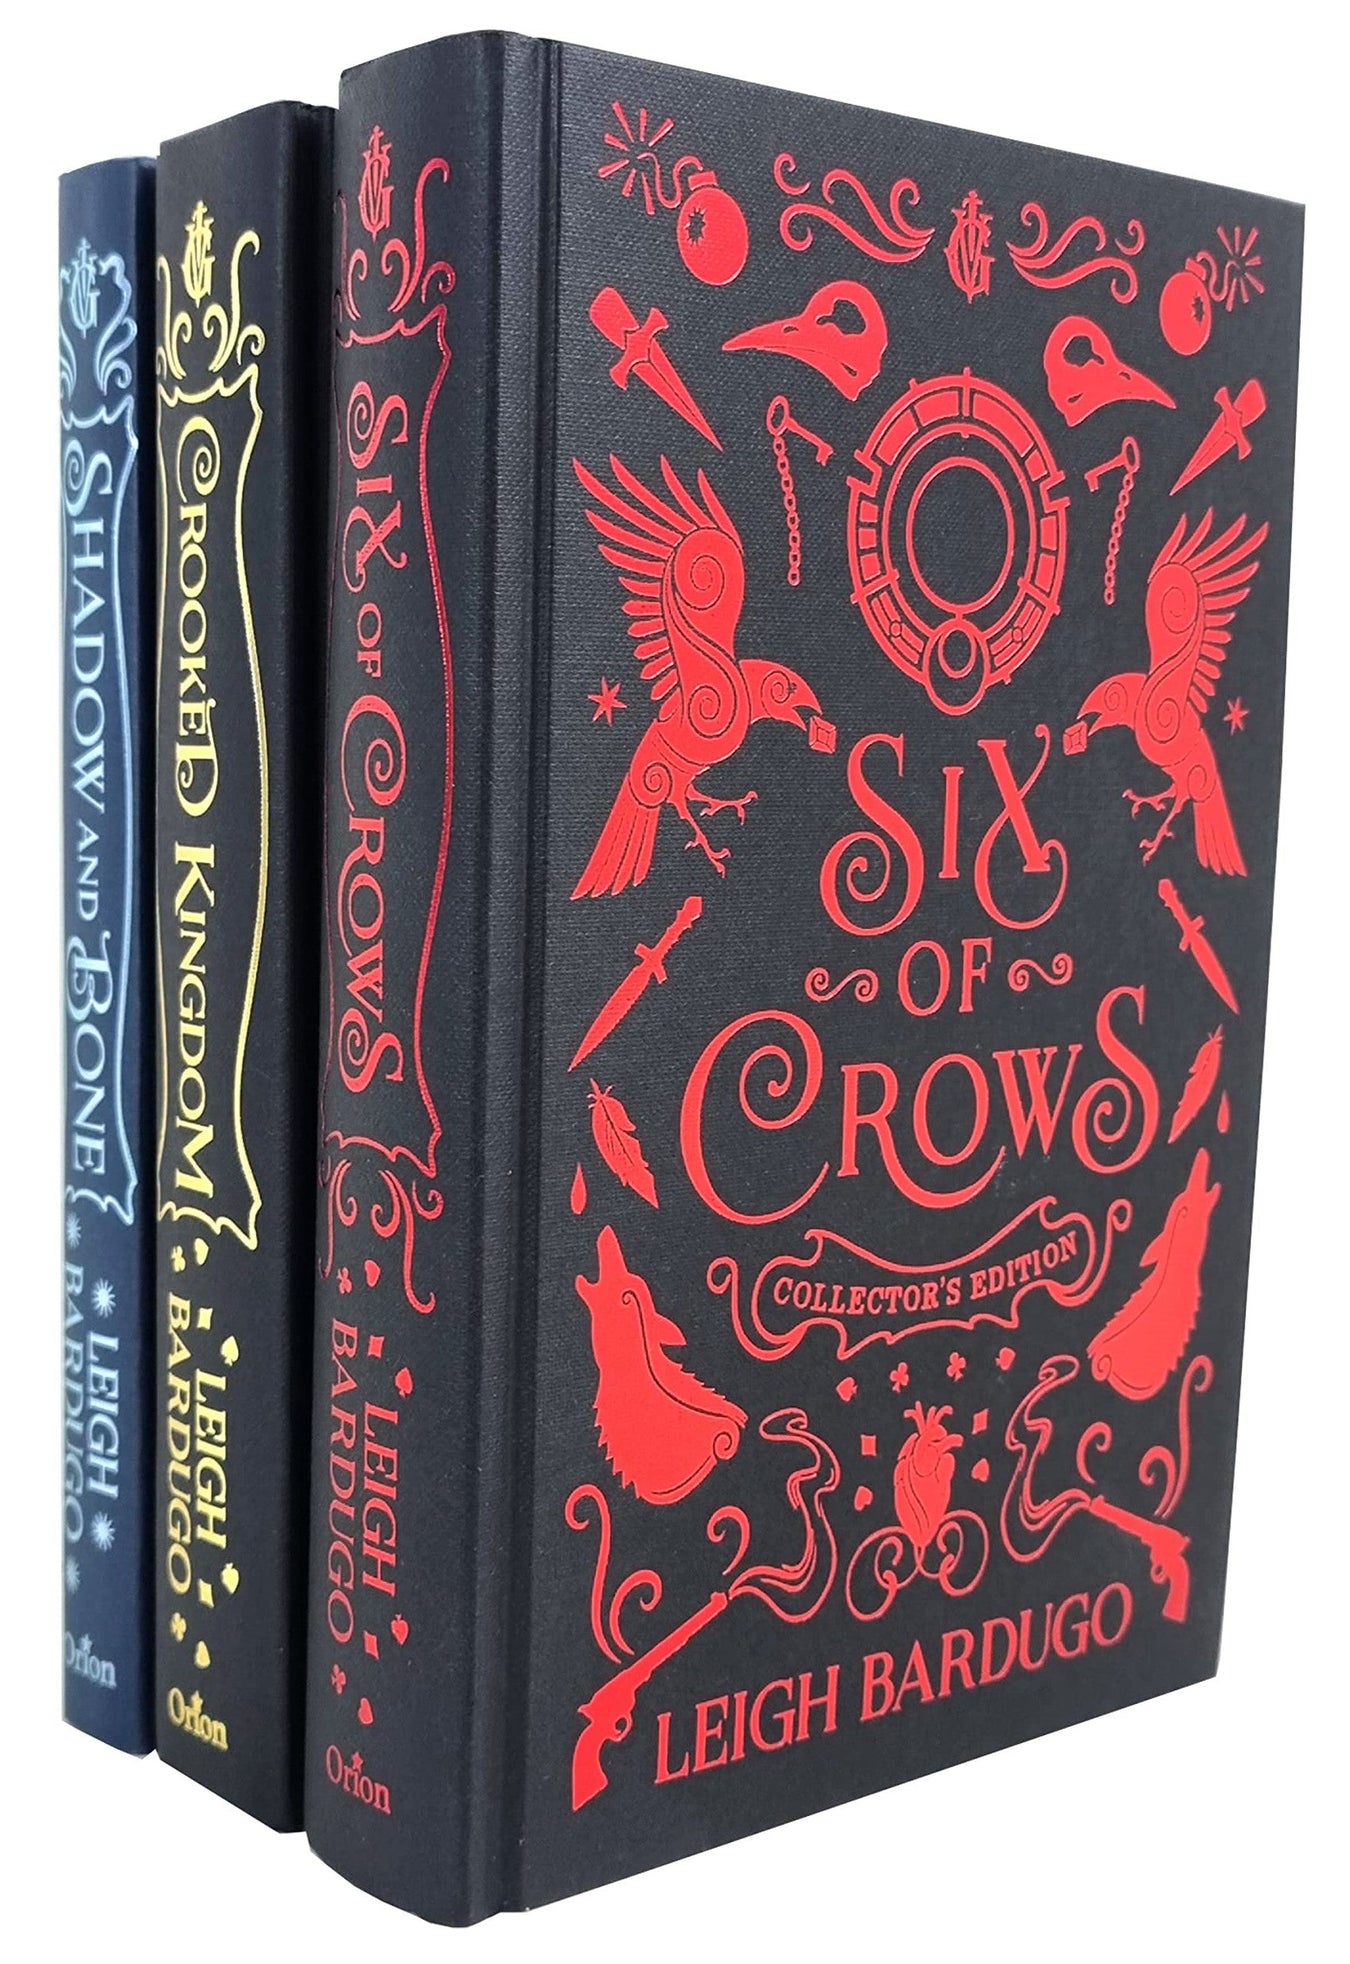 Grishaverse Books - Shadow and Bone Novels